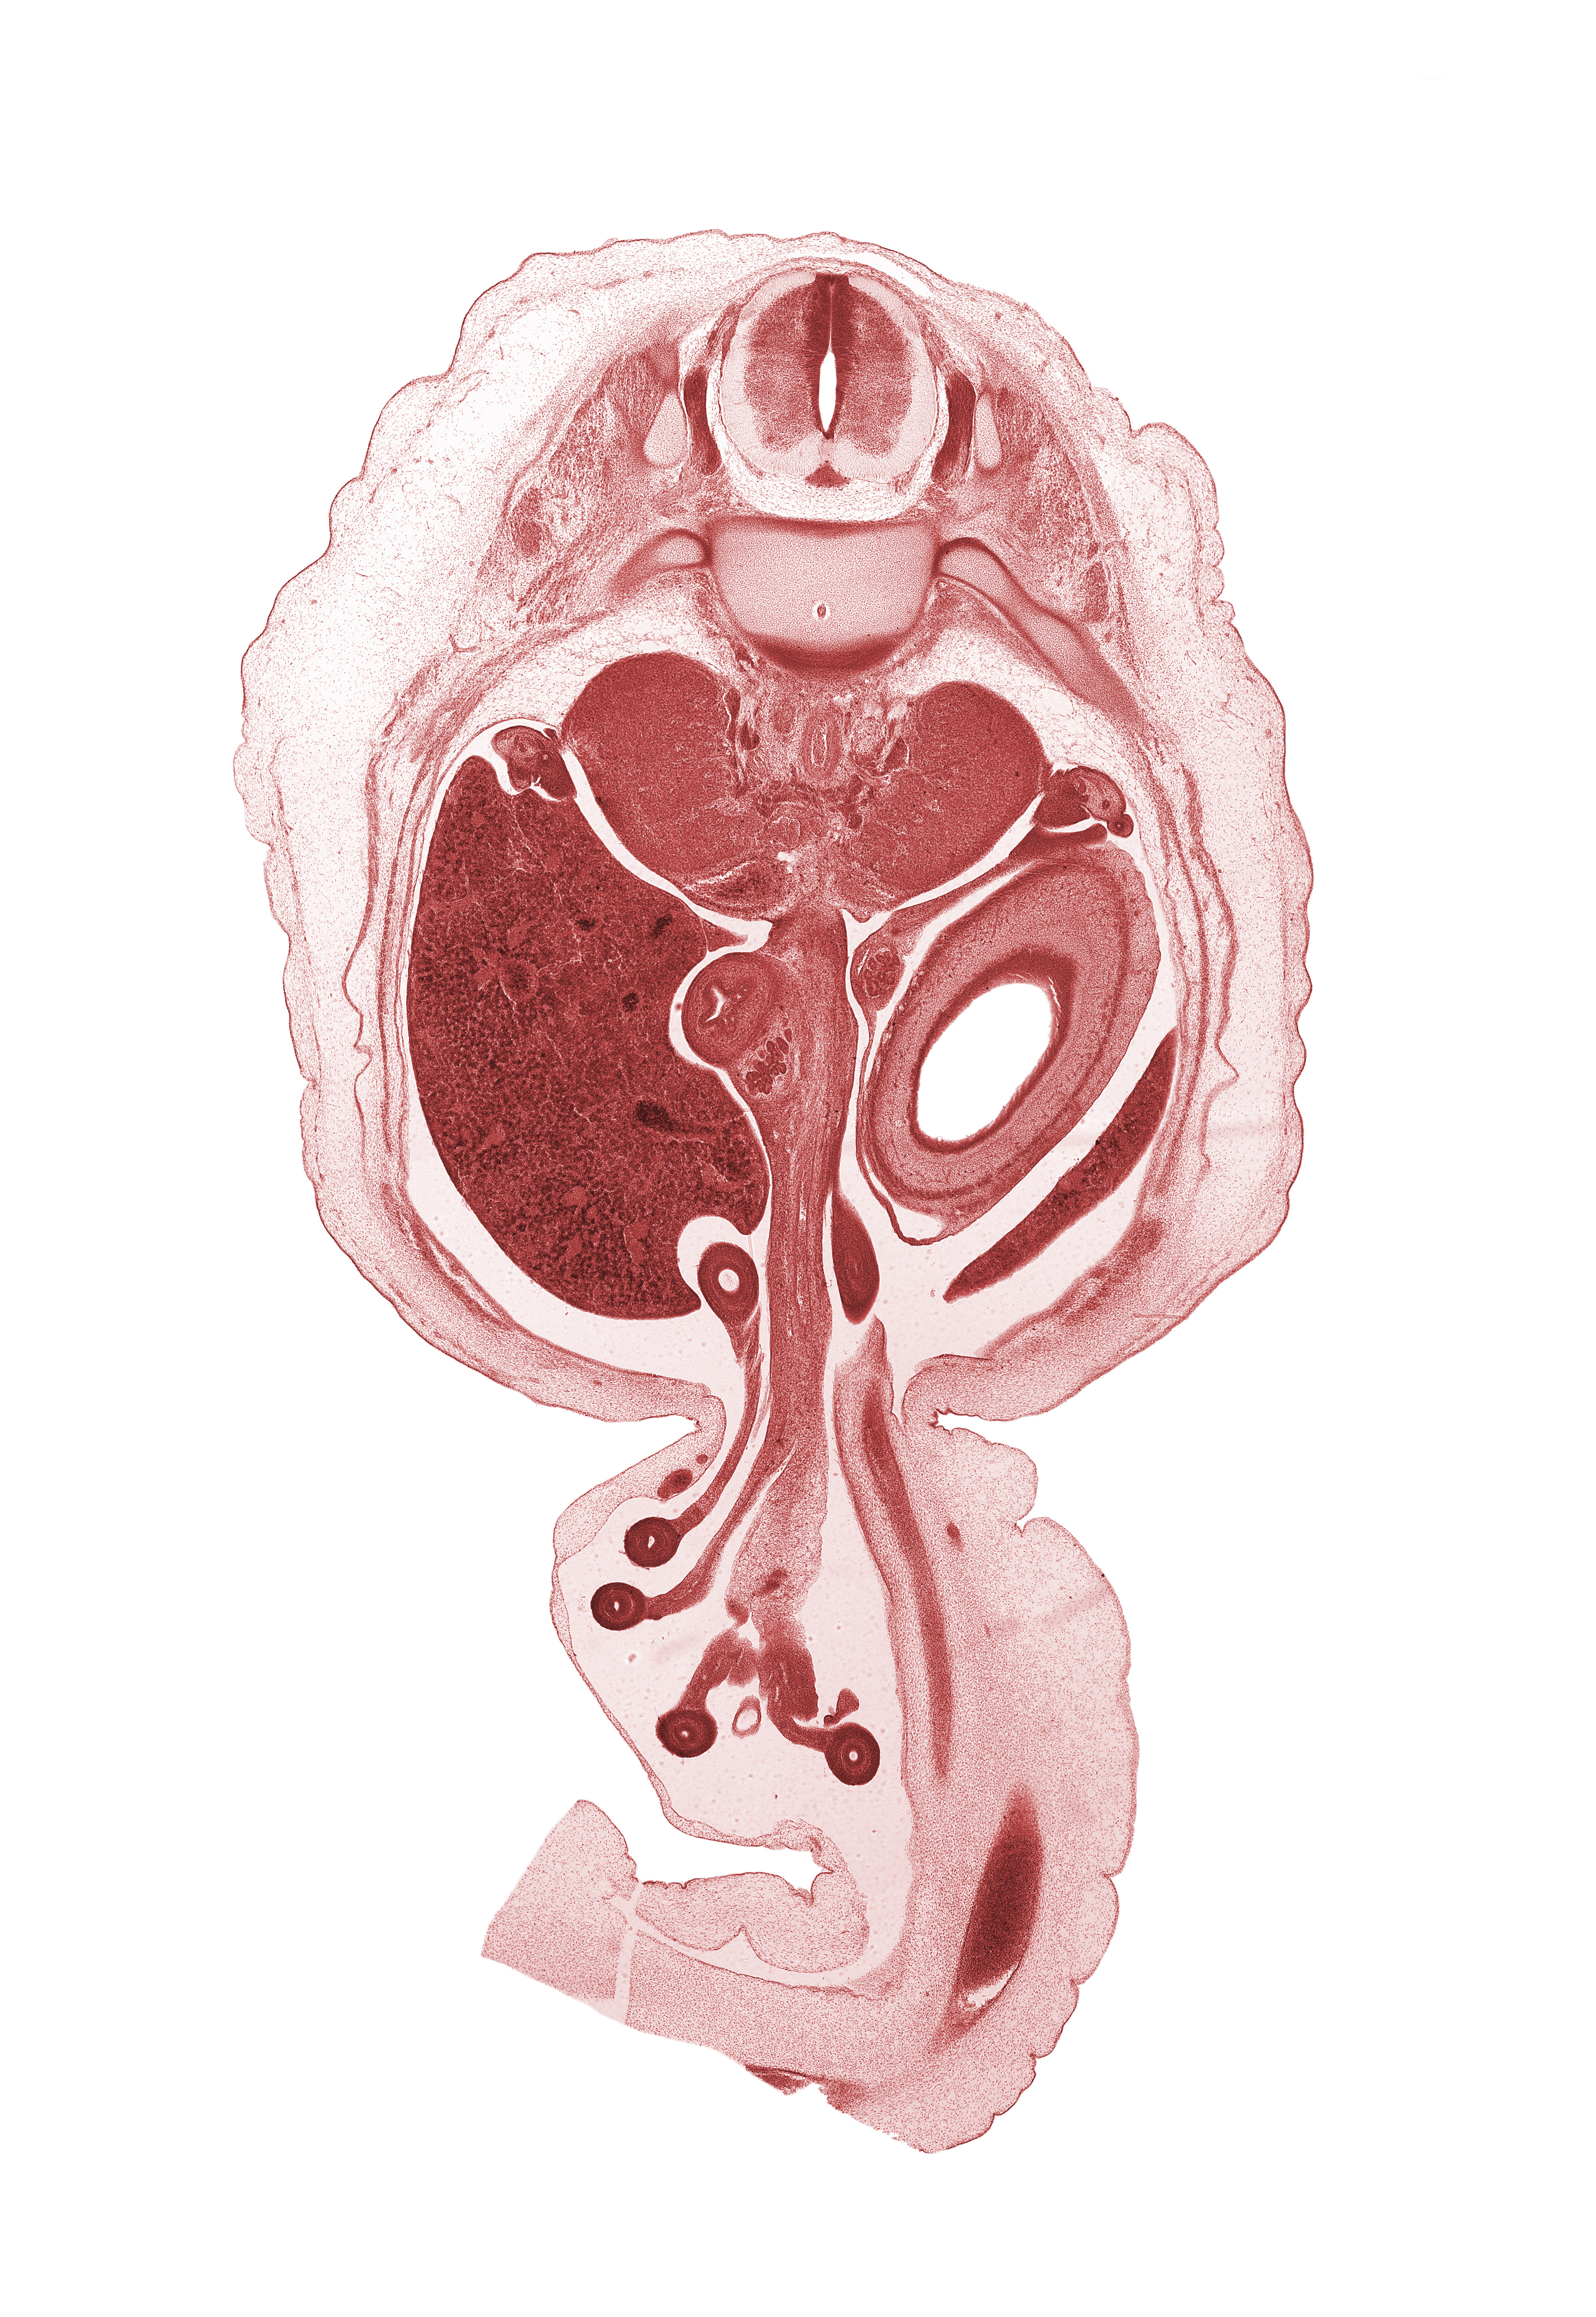 T-12 spinal ganglion, allantois, aorta, centrum of T-12 vertebra, descending part of duodenum (second part), distal limb of herniated midgut, dorsal mesogastrium, endoderm lining of stomach (mucosa), head of rib 12, head of ventral pancreas, hindgut (colon), jejunum, left umbilical artery, mesentery, muscularis of stomach, notochord, omphalomesenteric artery, proximal limb of herniated midgut, shaft of rib 12, spleen, superior mesenteric artery and vein, suprarenal gland cortex, testis, umbilical vein, vas deferens (mesonephric duct)